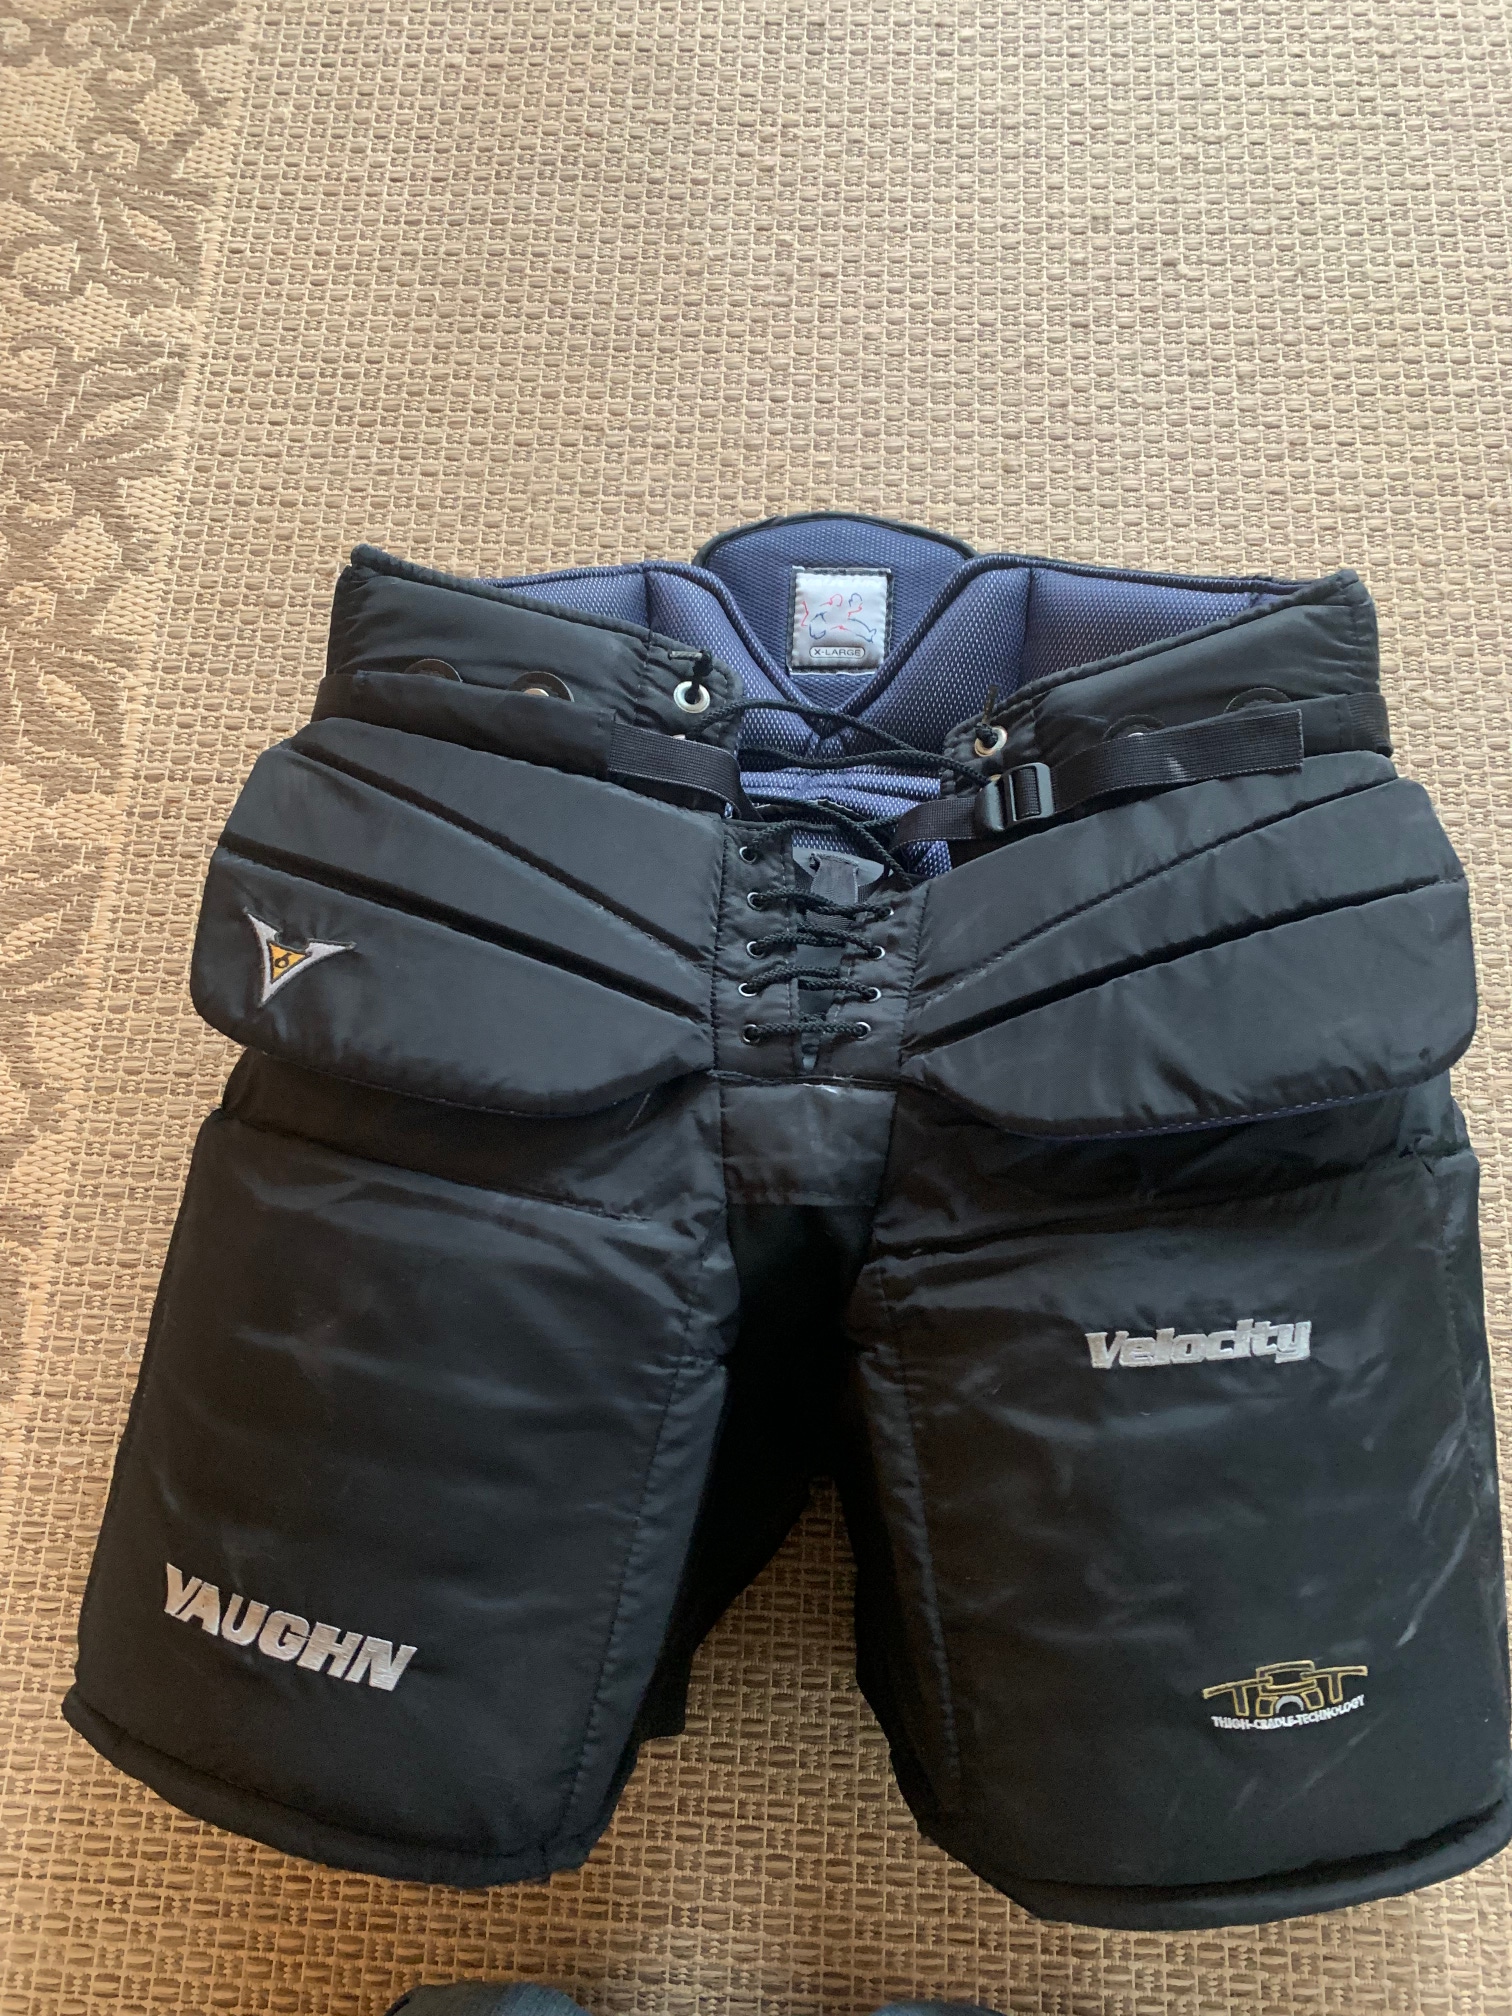 Used Vaughn V6 2000 Pro Hockey Goalie Pants